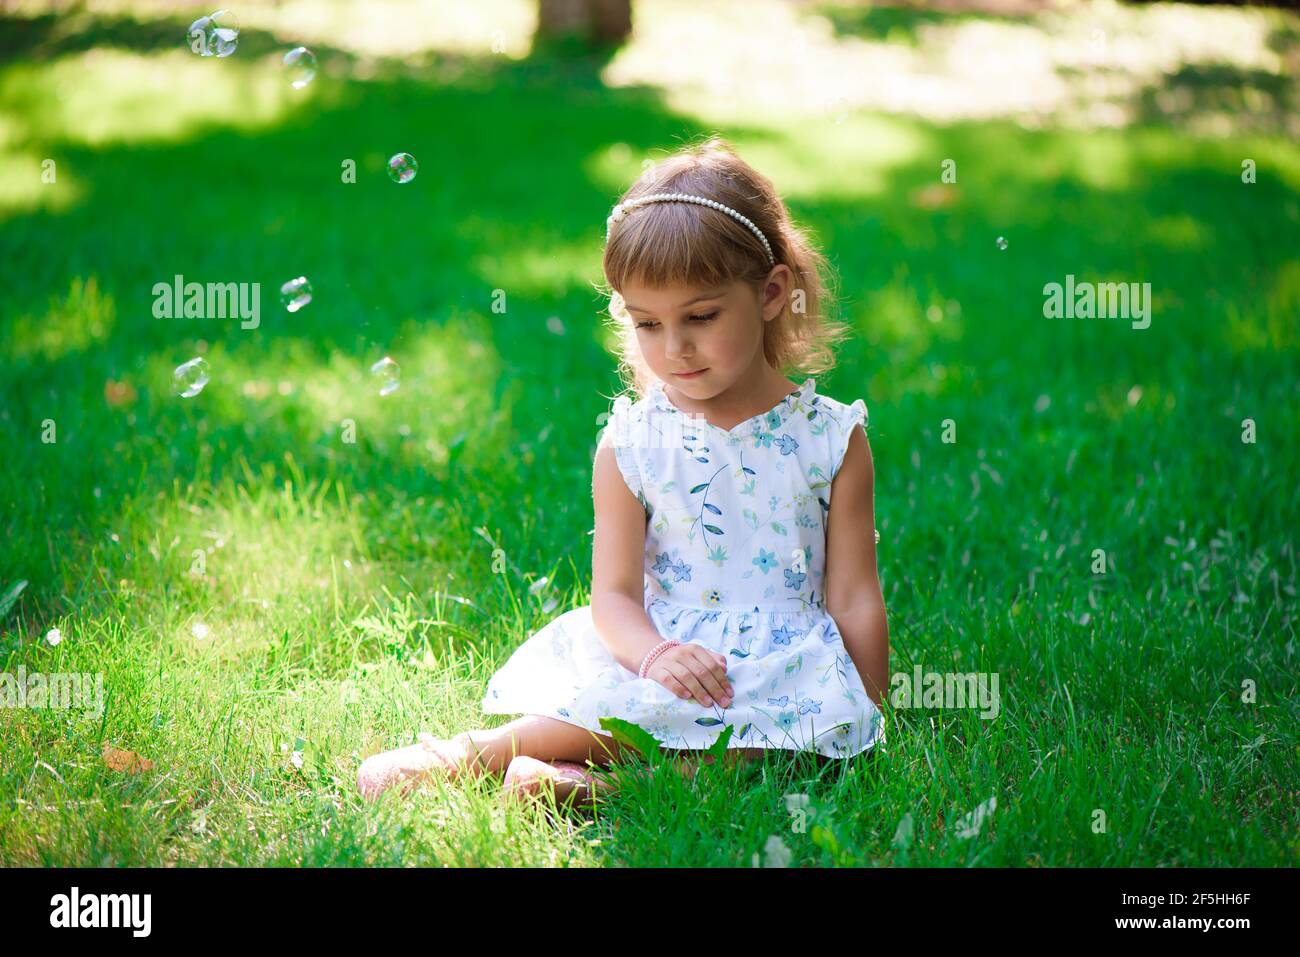 https://c8.alamy.com/comp/2F5HH6F/portrait-of-a-smiling-little-girl-sitting-on-green-grass-2F5HH6F.jpg